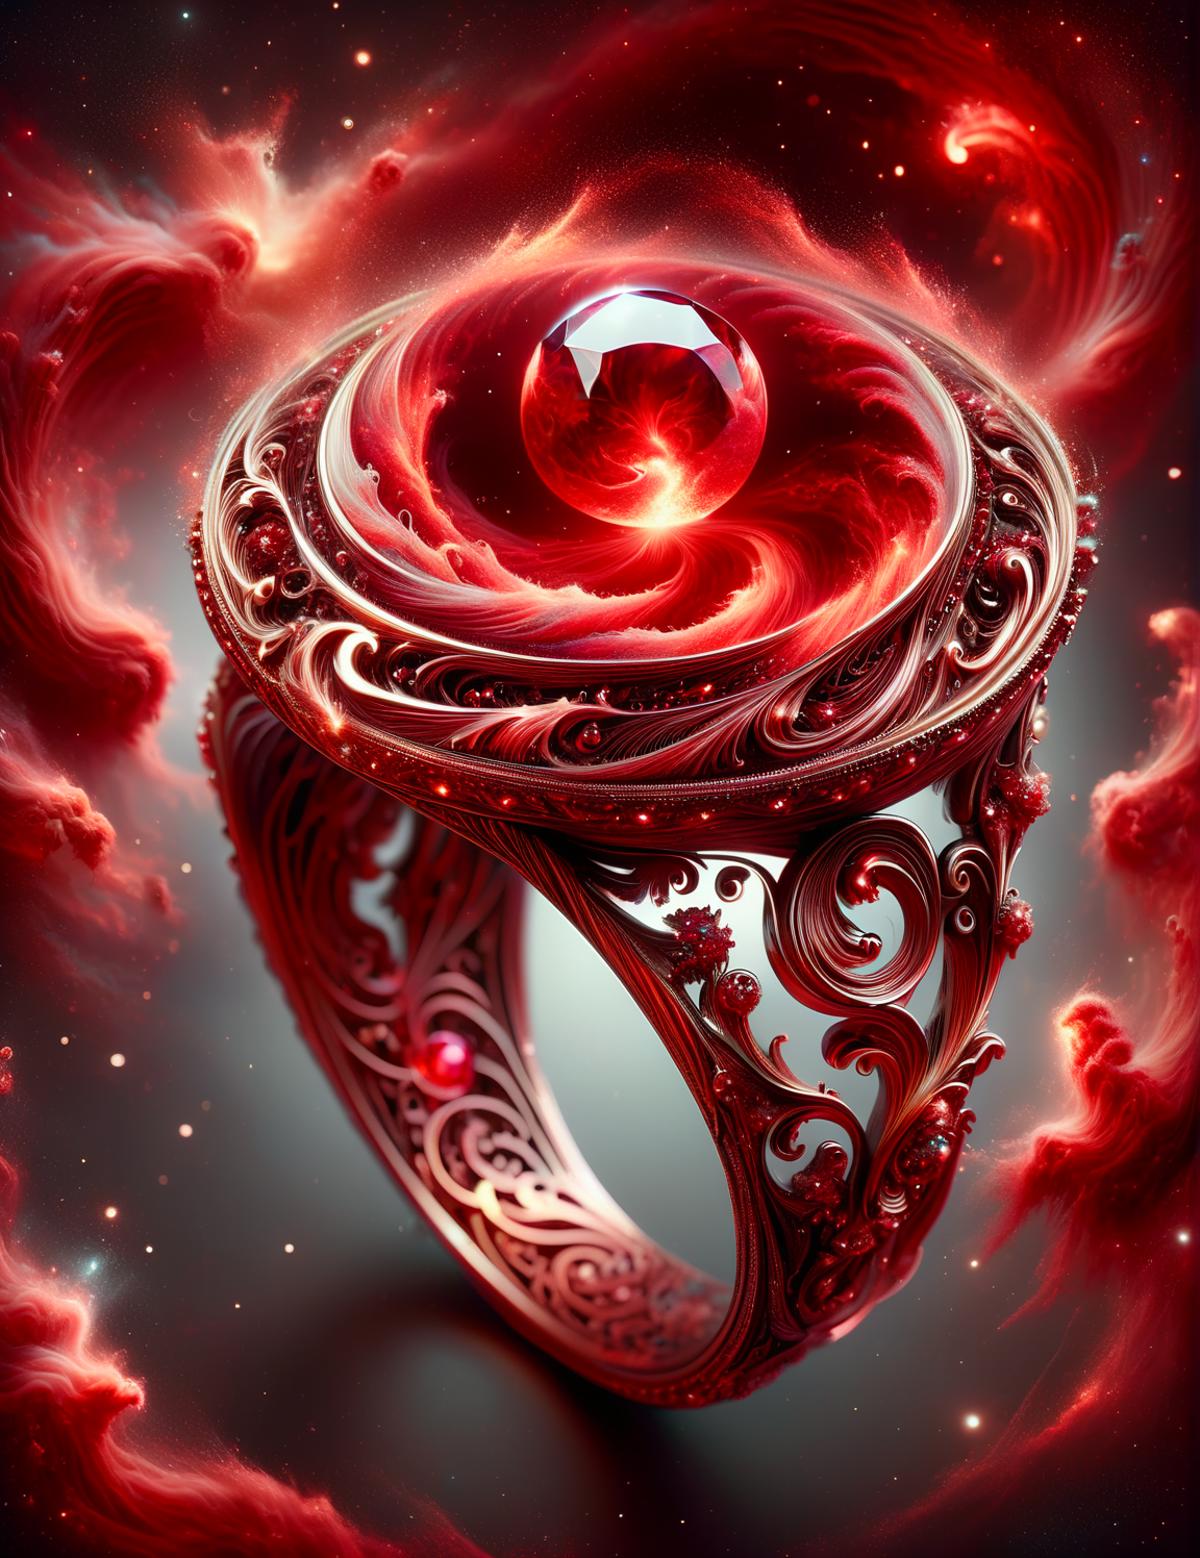 🌌XL Raging Red Nebula🌌 image by Faeia